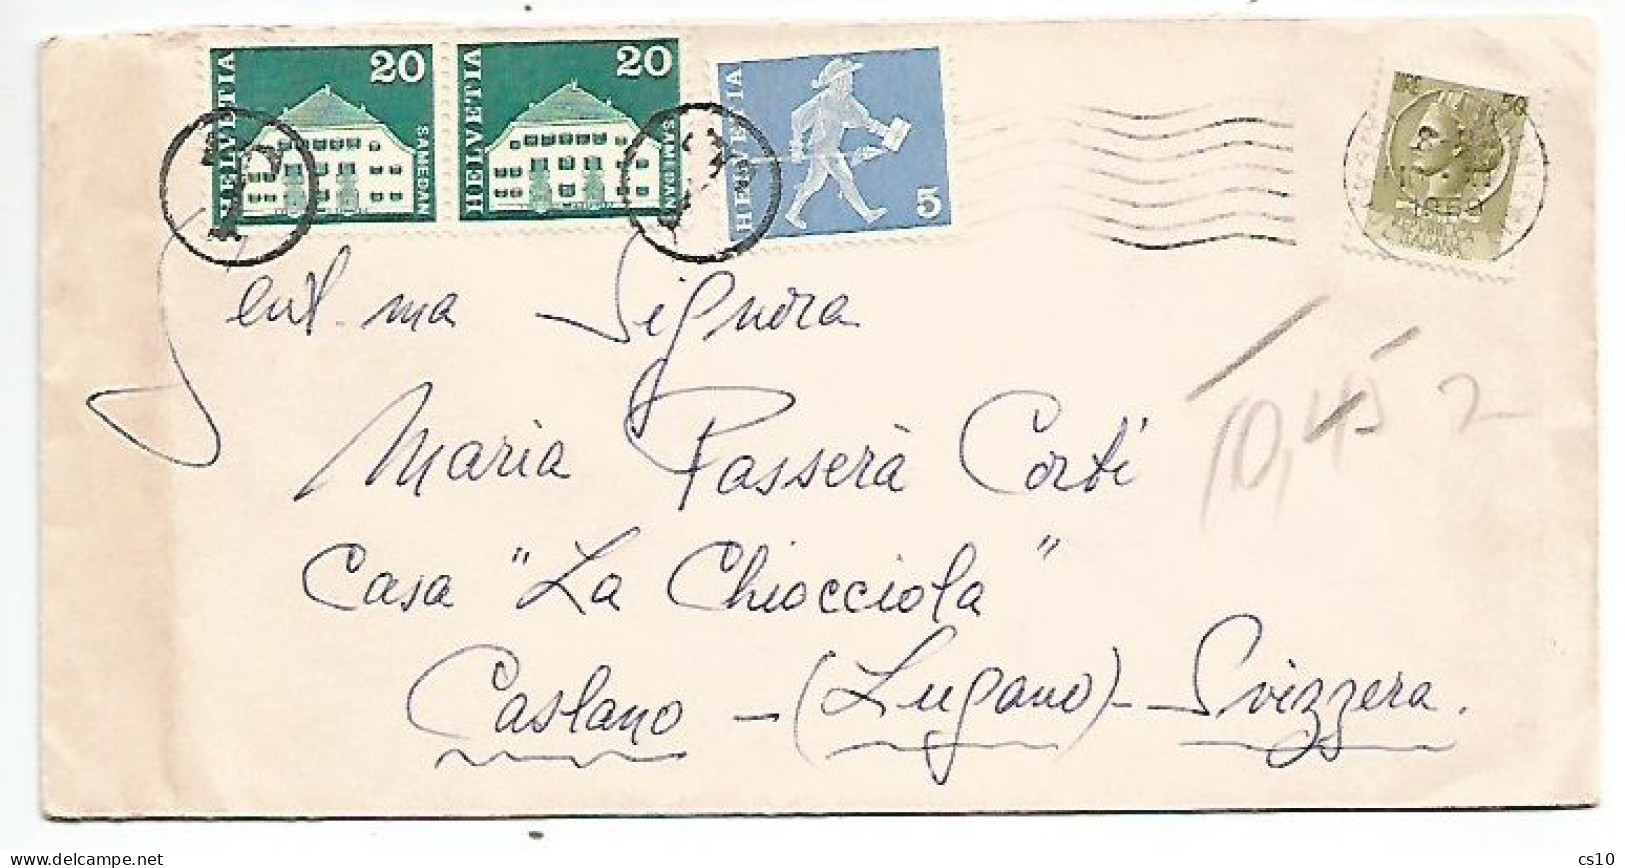 Suisse 3v Regular Issues C.20 Pair + Postman C.5 Used As Postage Due Tax CV Italy 10nov1969 - Poststempel